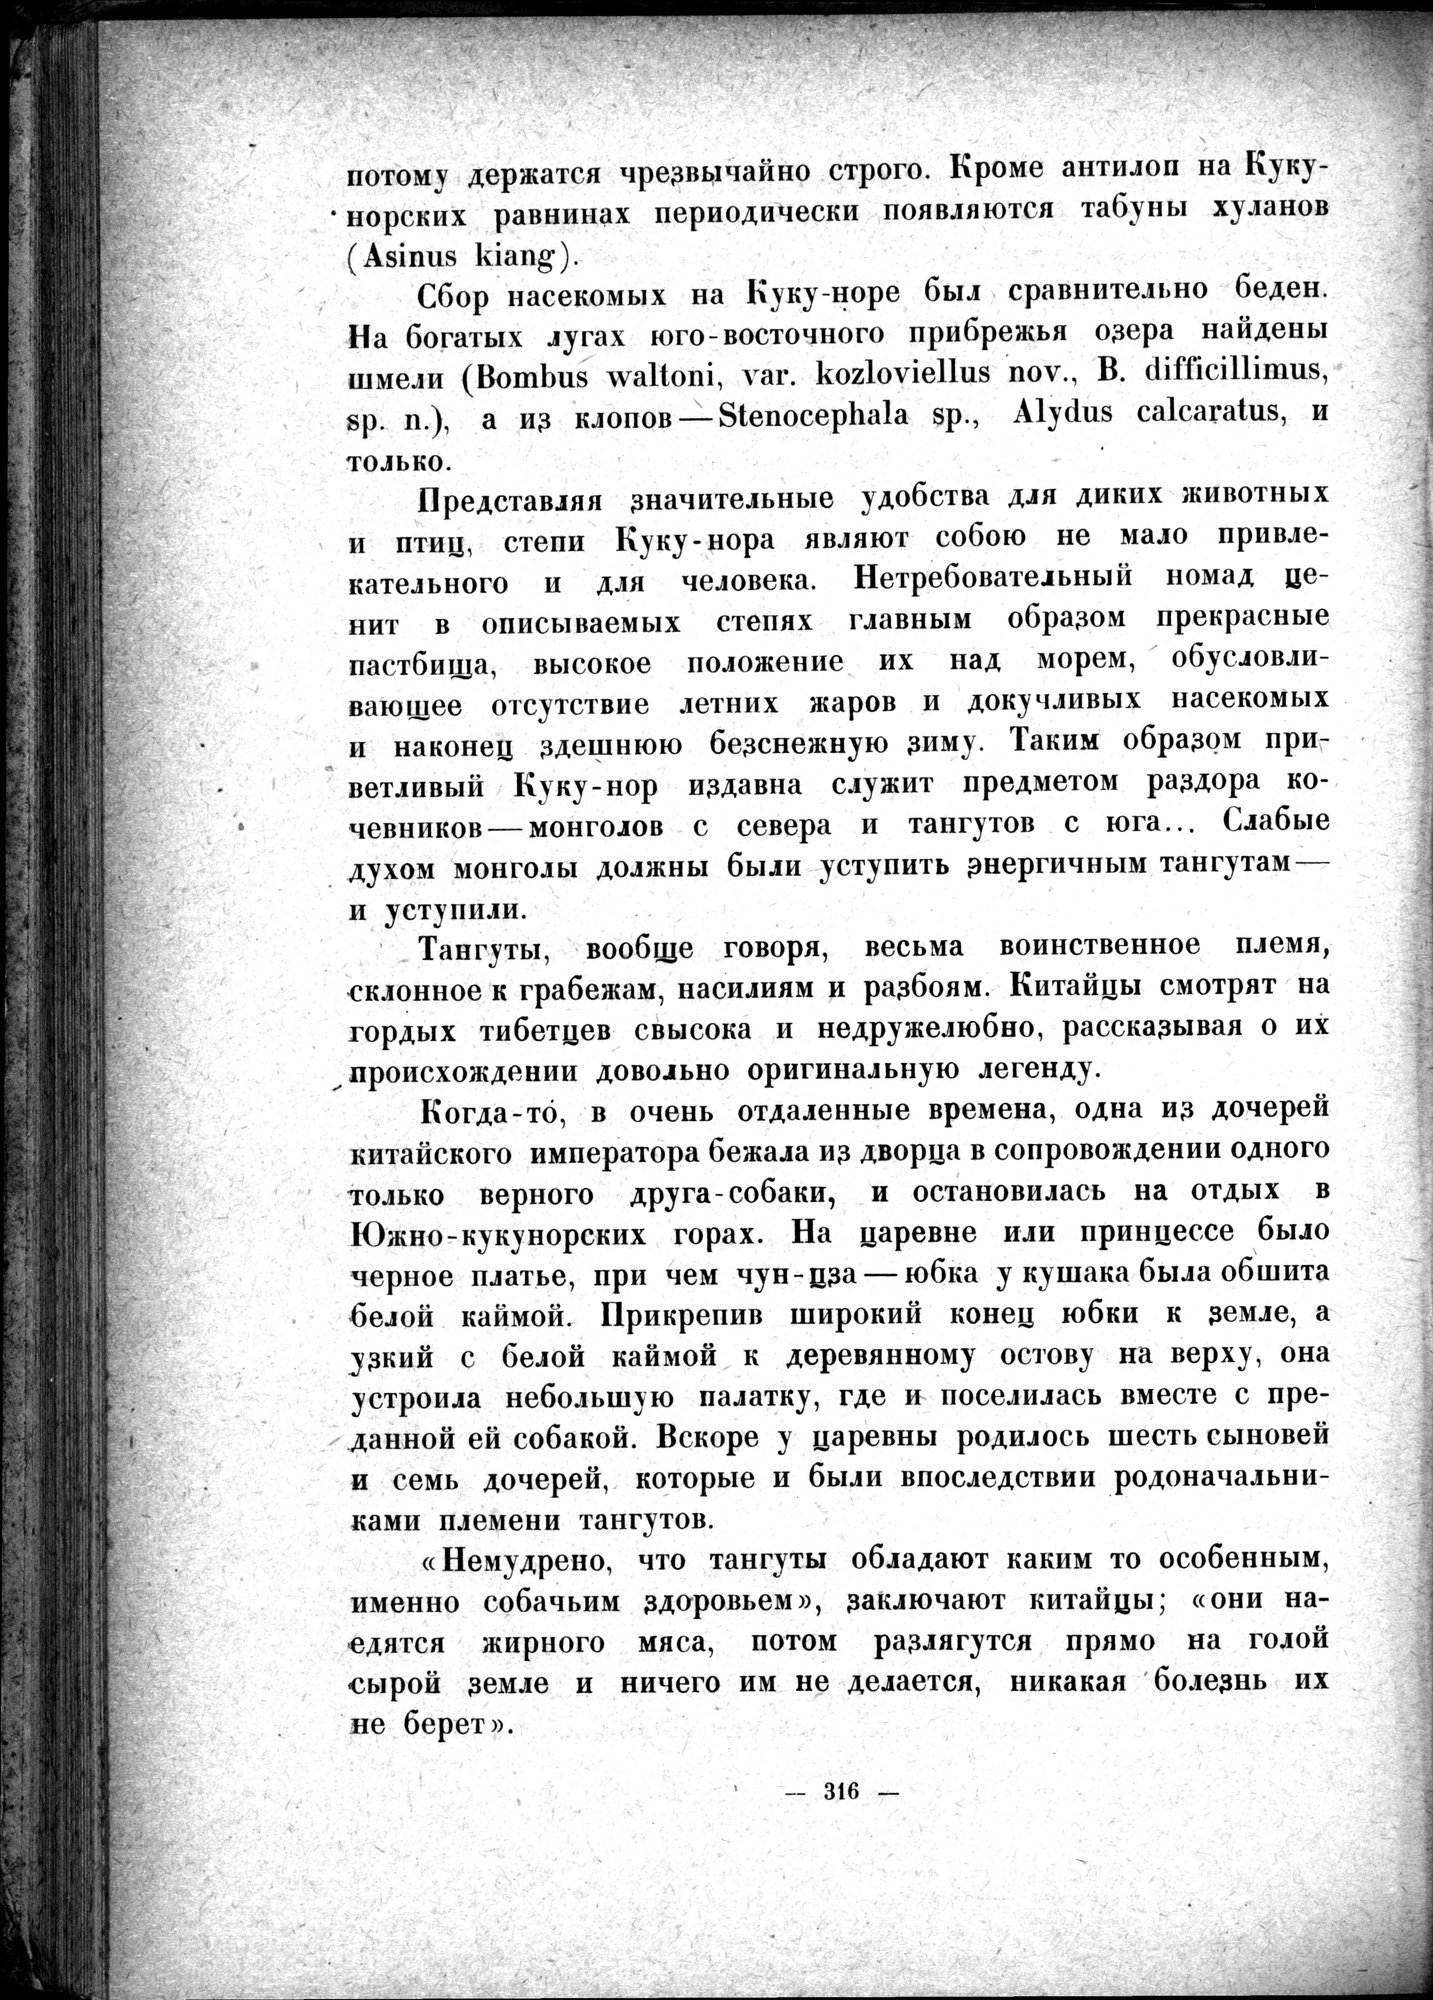 Mongoliya i Amdo i mertby gorod Khara-Khoto : vol.1 / Page 366 (Grayscale High Resolution Image)